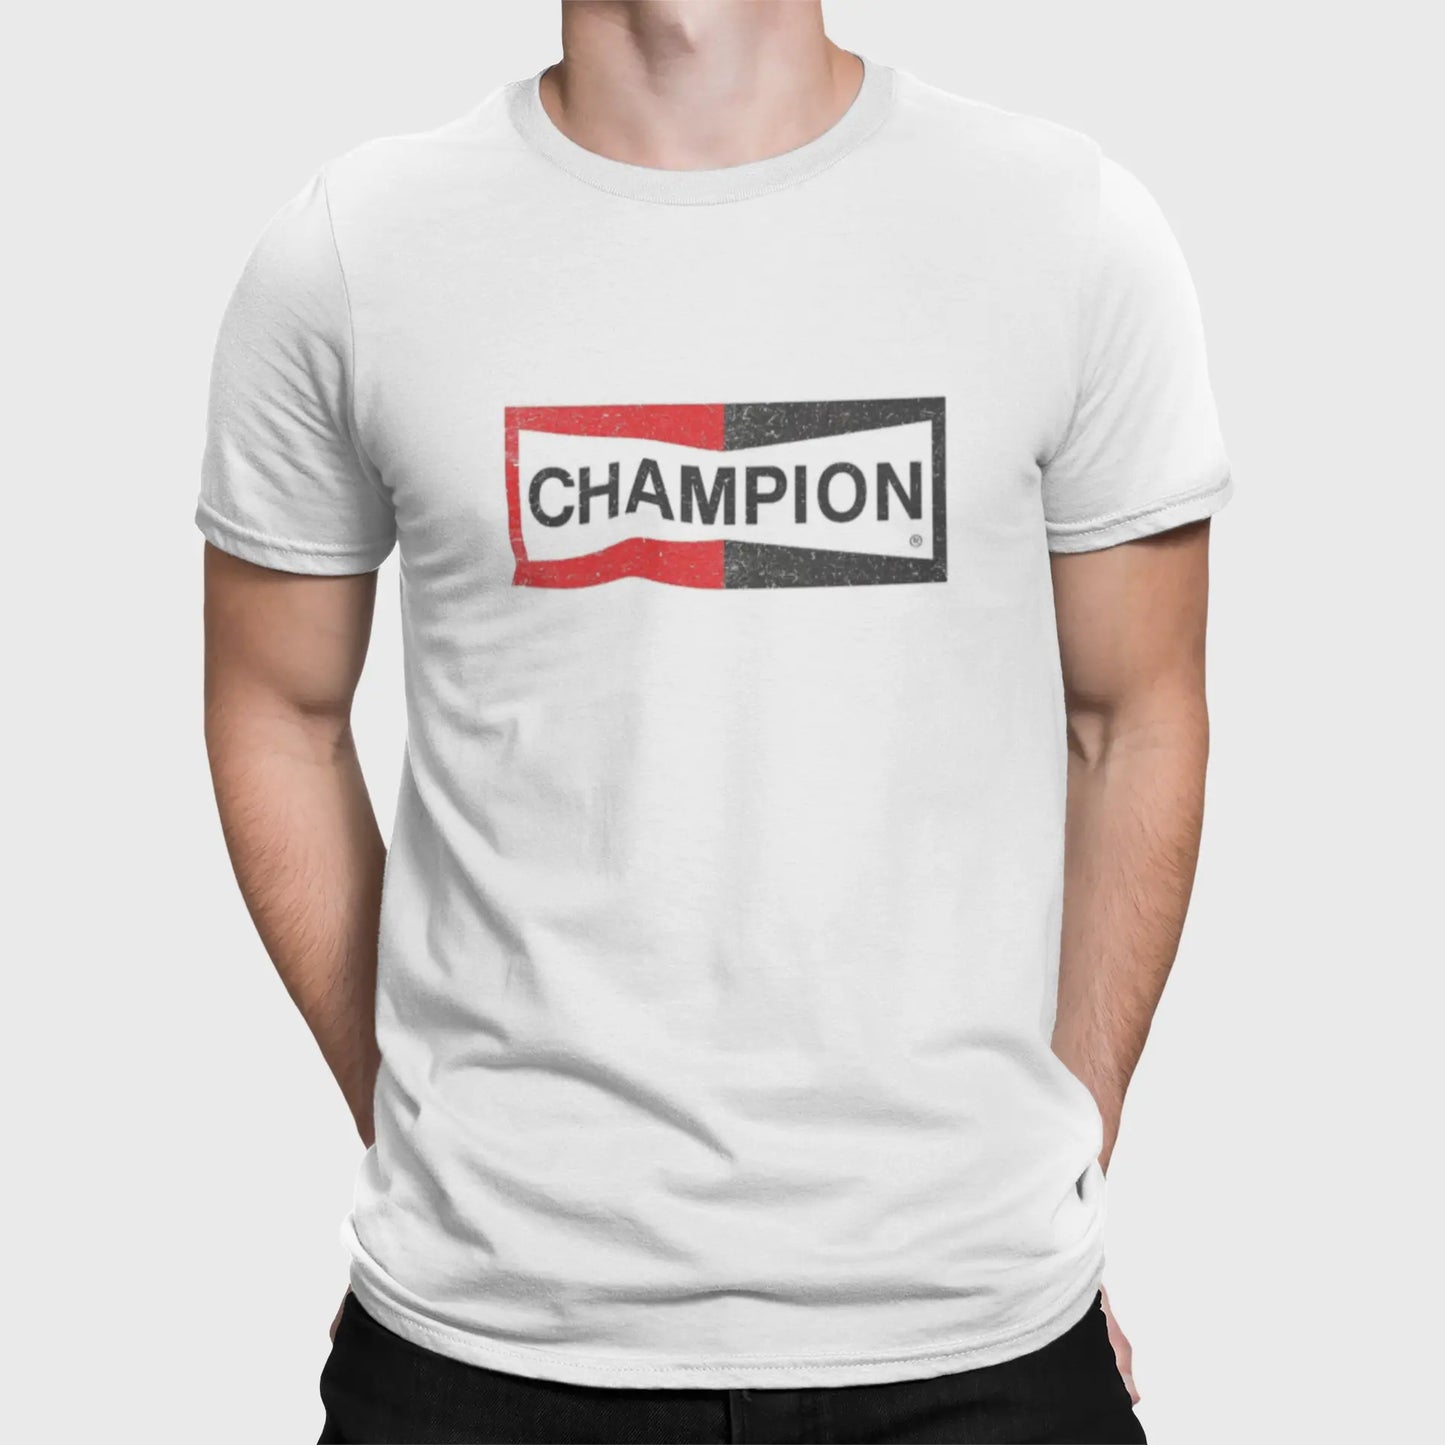 Champion OUATIH T-Shirt Looper Tees